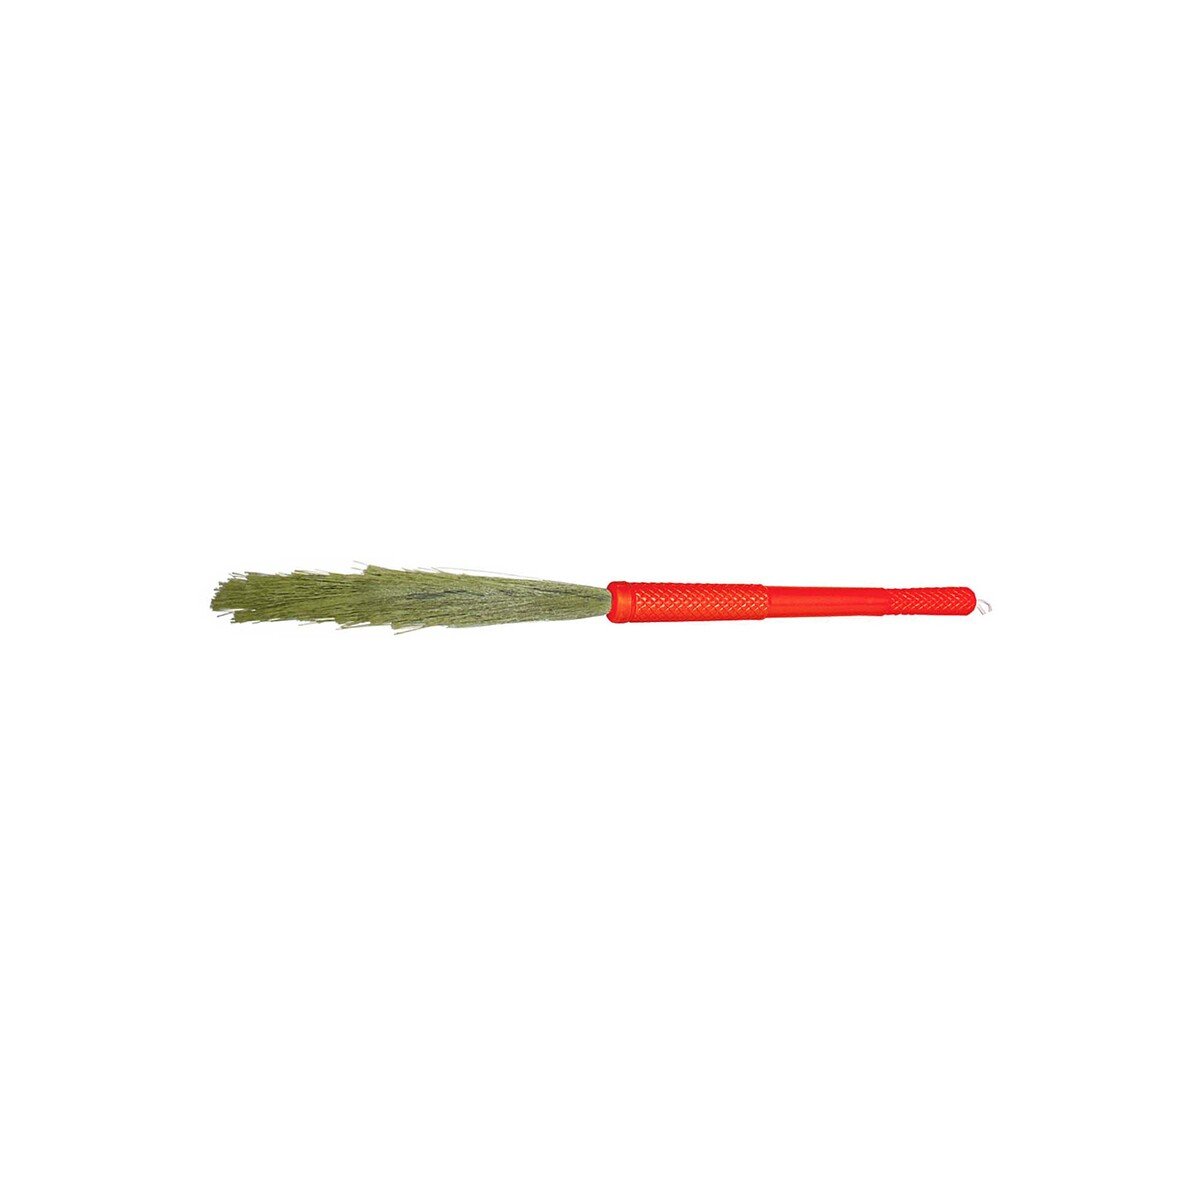 Gebi Sweeping Broom 569, 1 pc, Assorted Colors